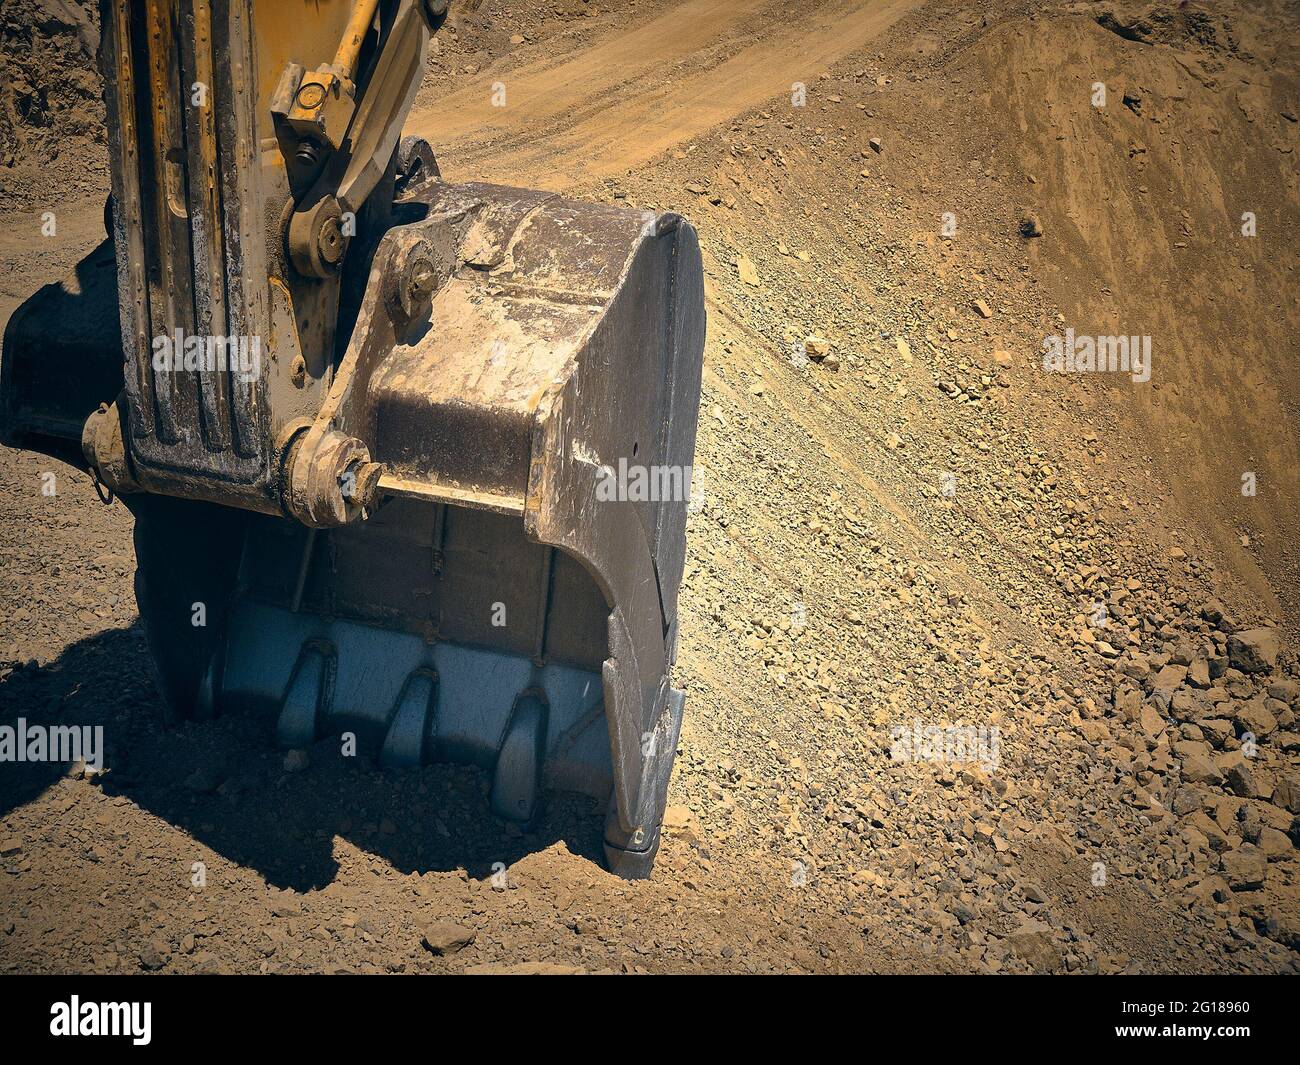 Bucket of excavator on construction site Stock Photo